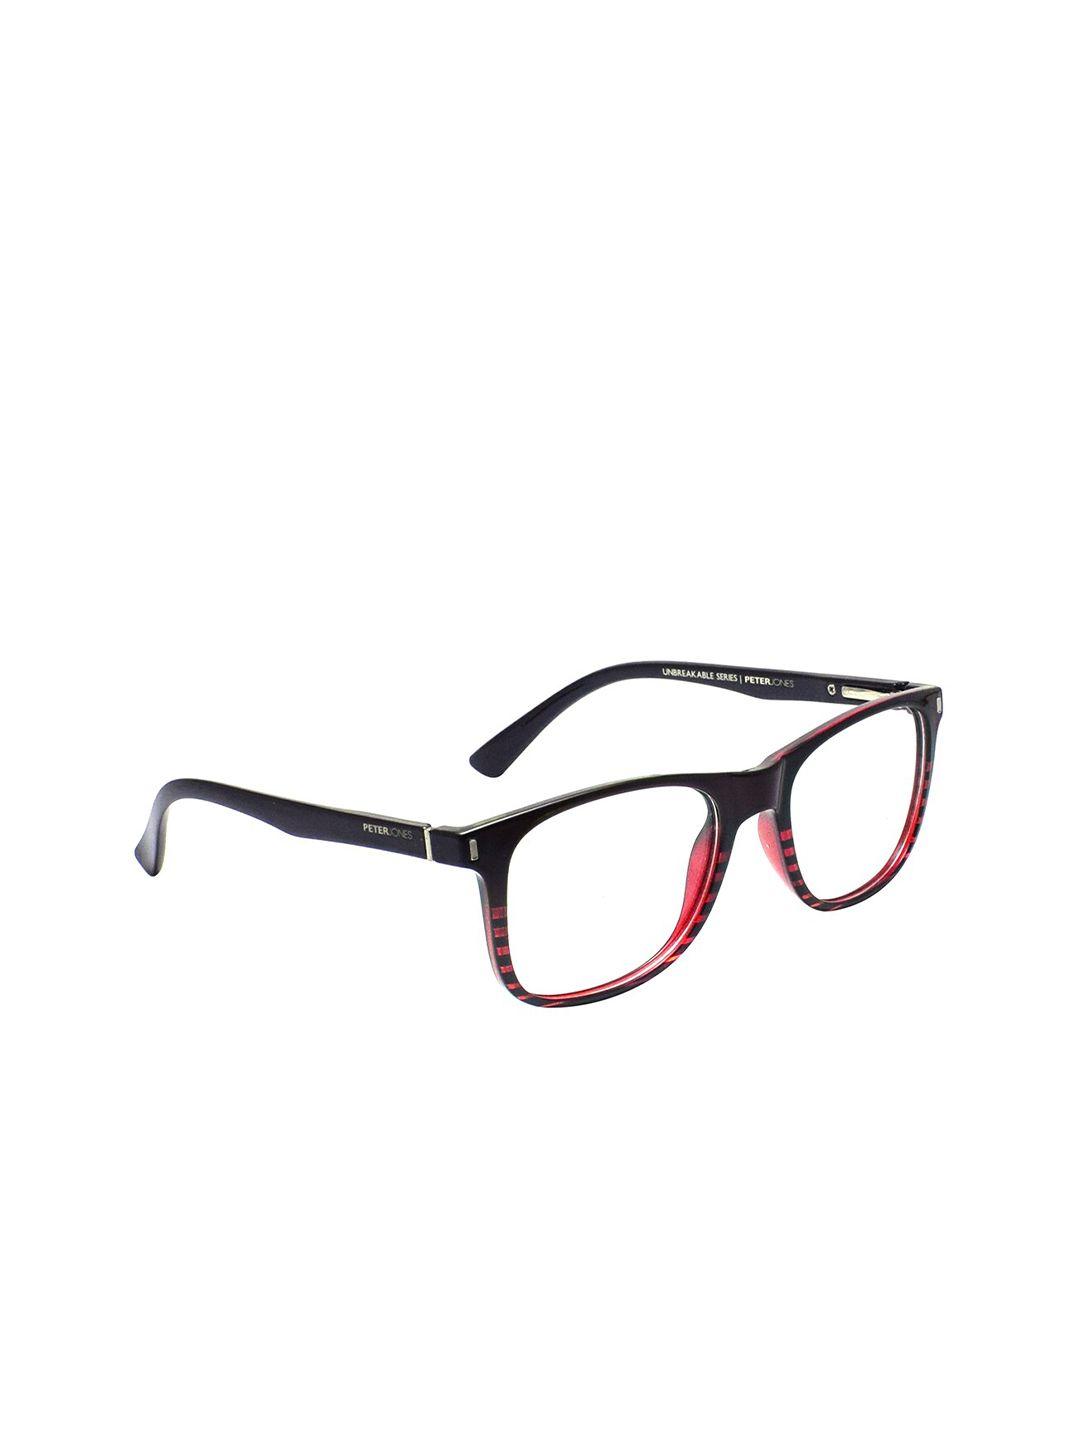 peter jones eyewear unisex red & black striped full rim square frames